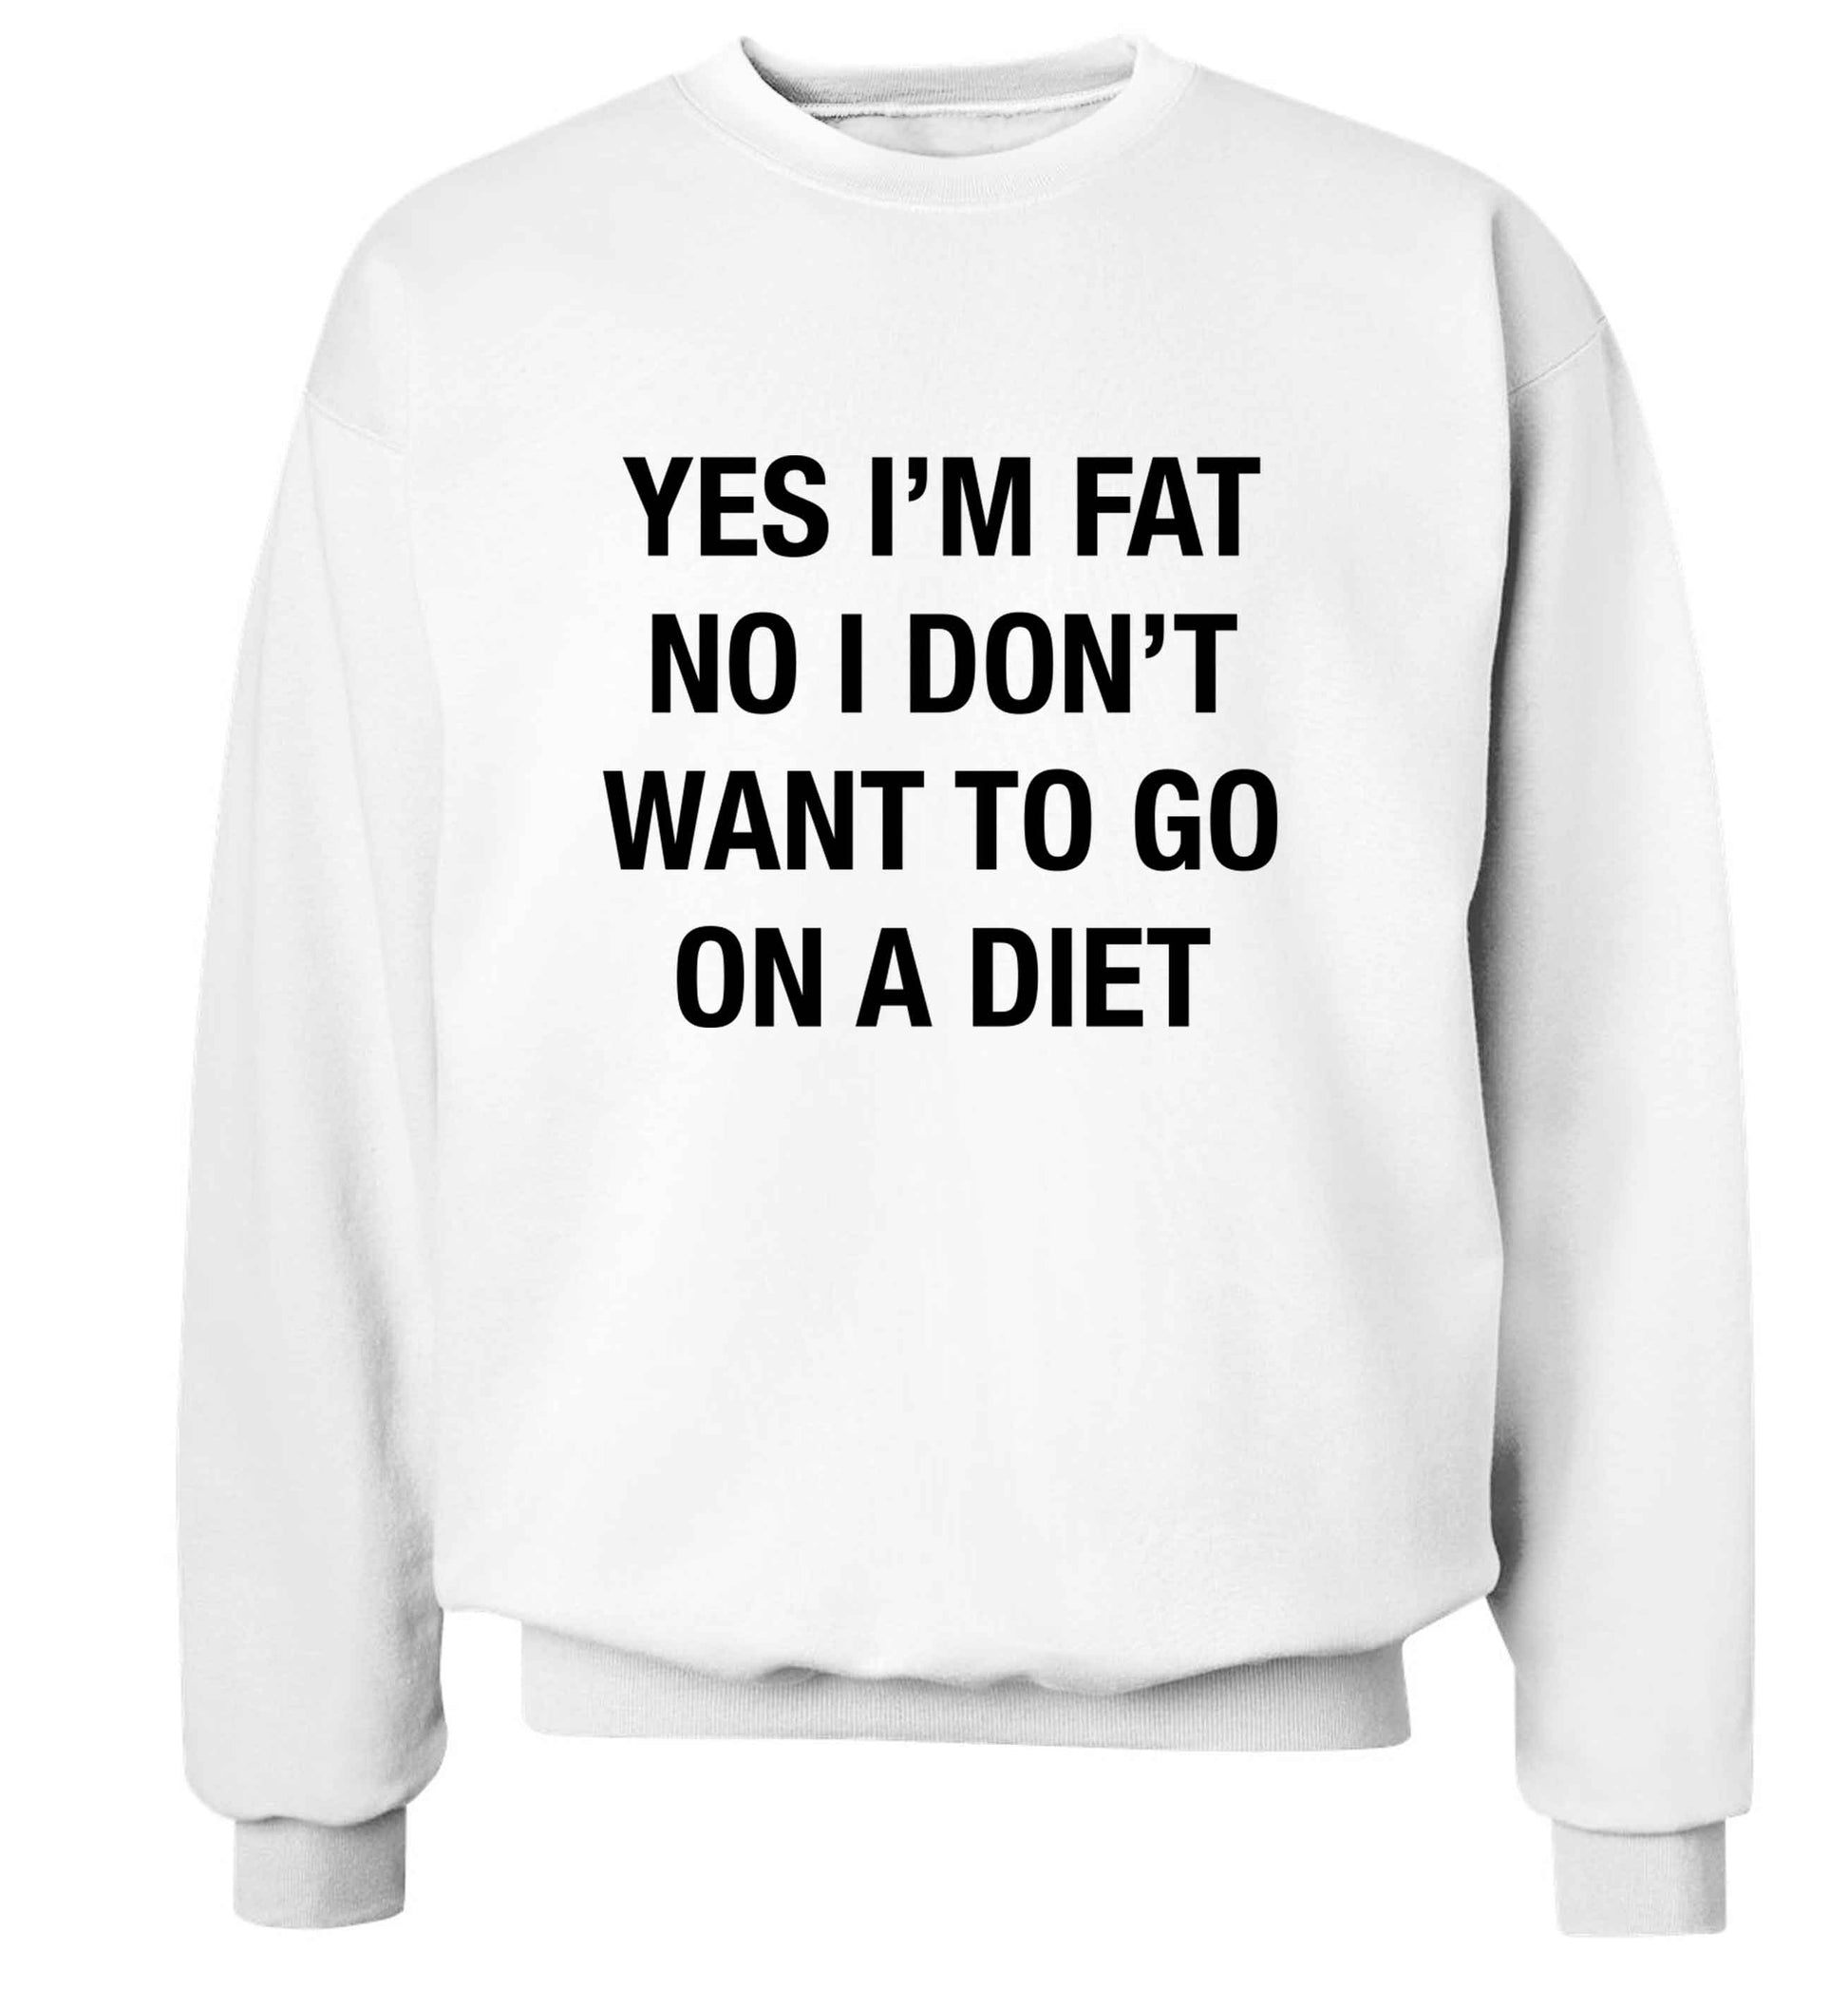 Yes I'm fat, no I don't want to go on a diet adult's unisex white sweater 2XL